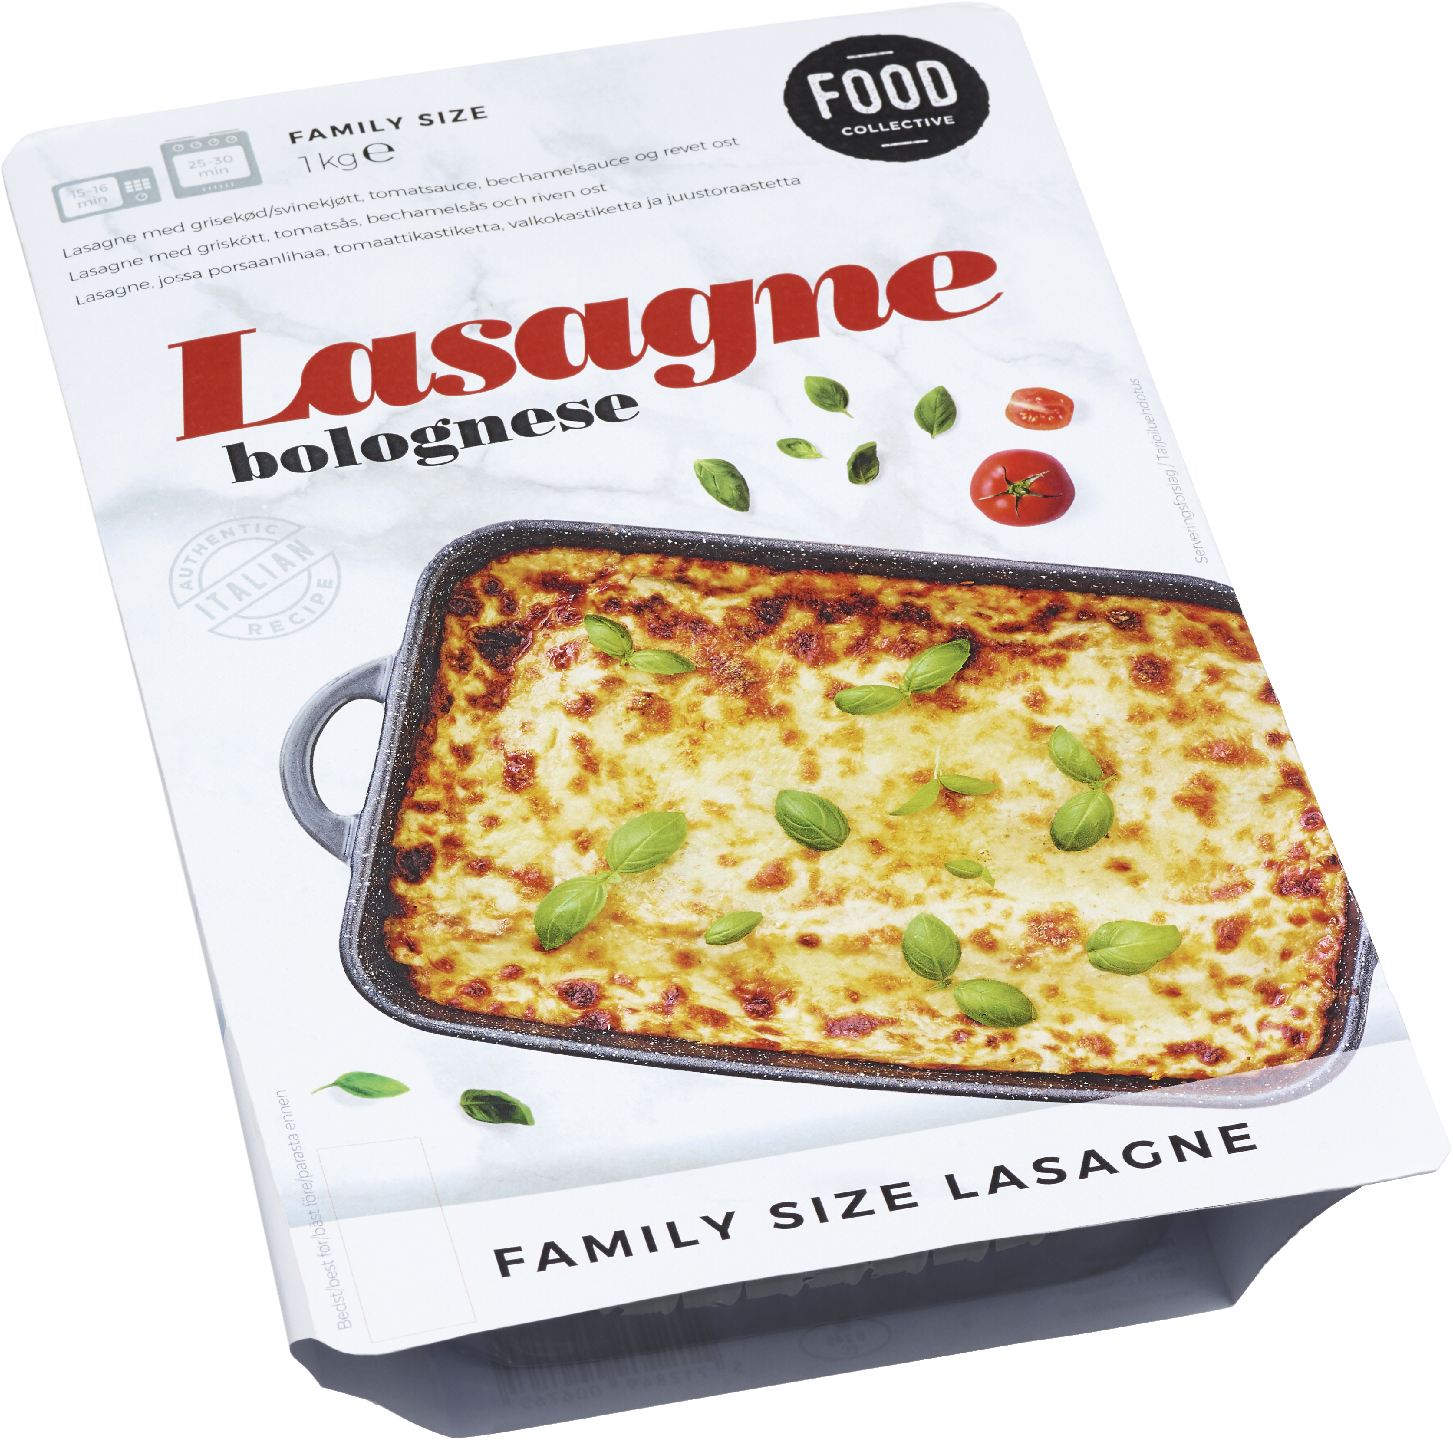 Food Collective lasagne bolognese 1kg